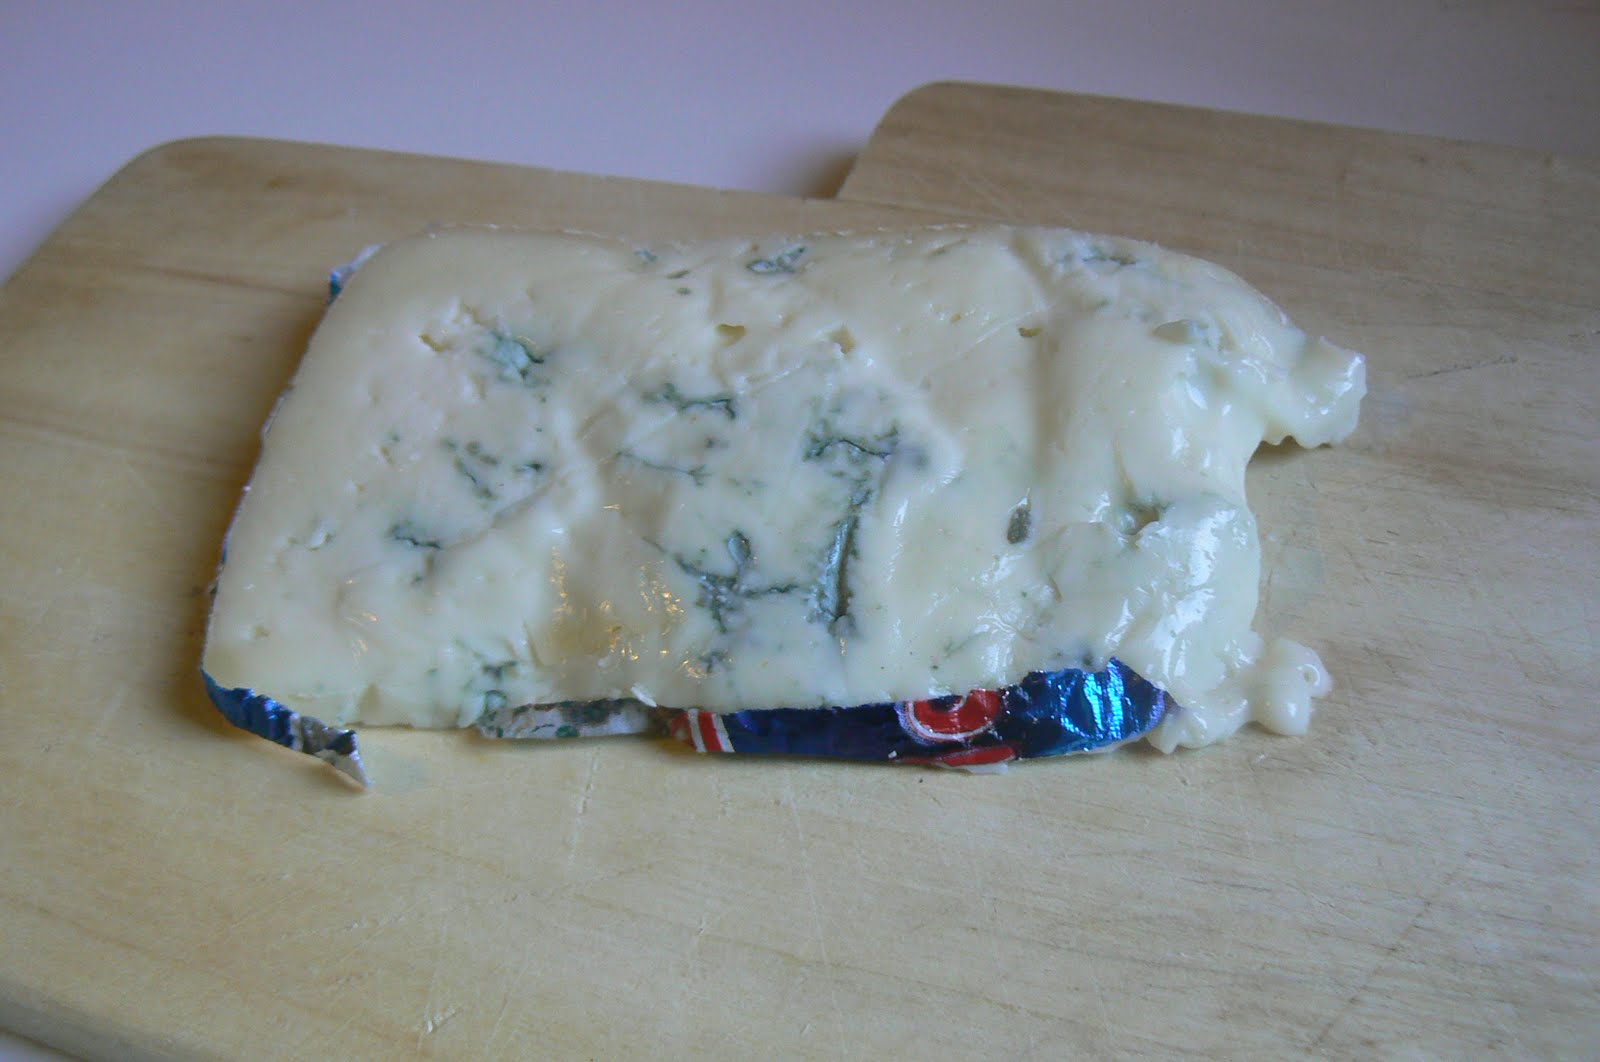 Gorgonzola Dolce (Italian Pasteurized Cow's Milk Cheese)